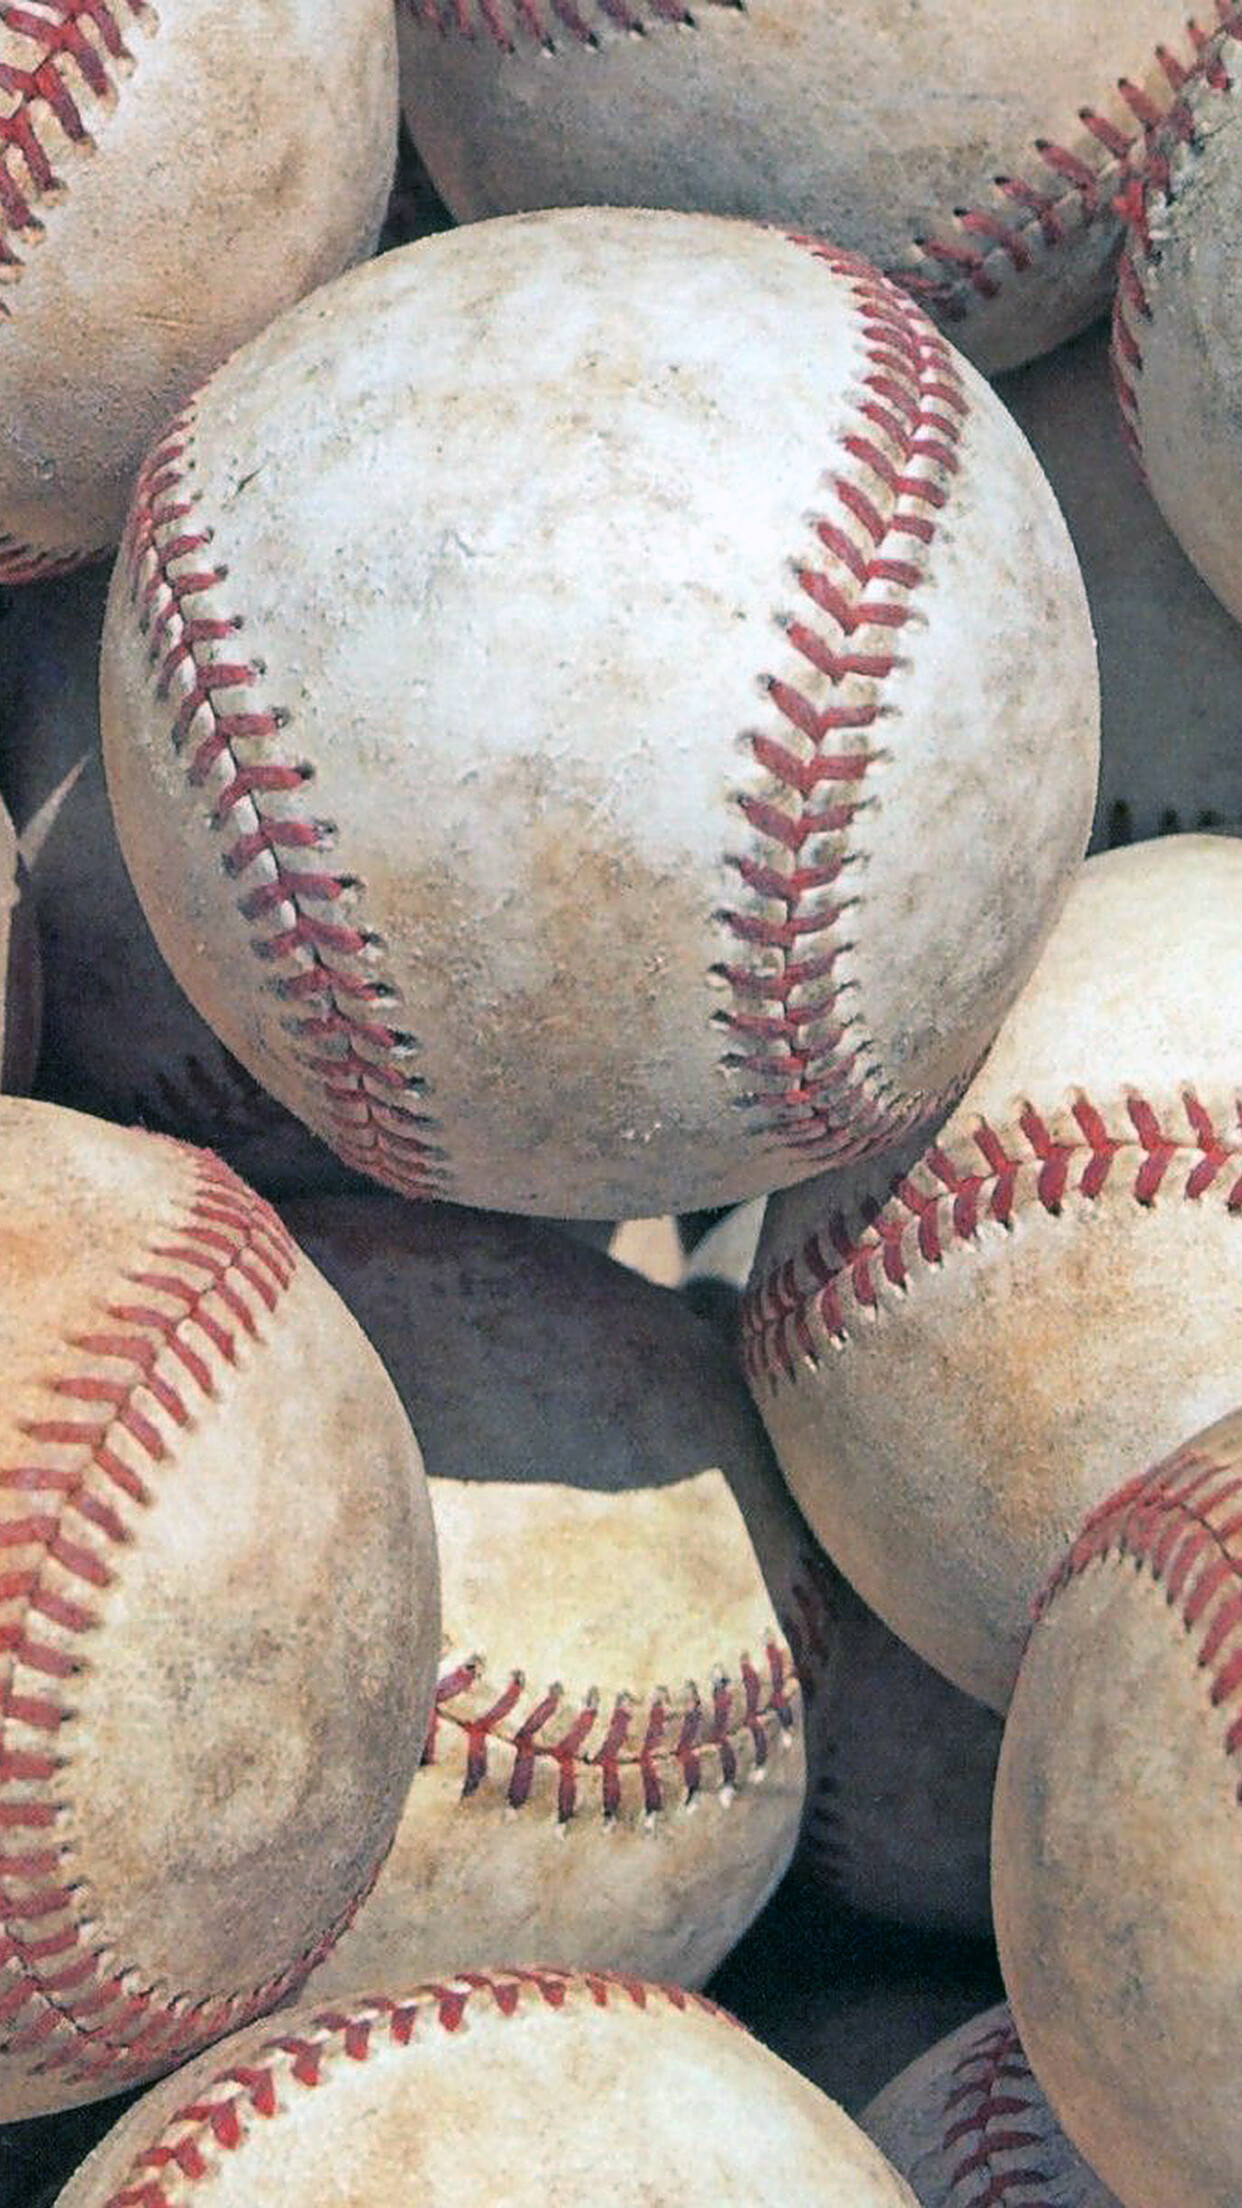 Baseball on iPhone, Baseball wallpapers for iPhone, Baseball stadium night view, Baseball fan pride, 1250x2210 HD Phone